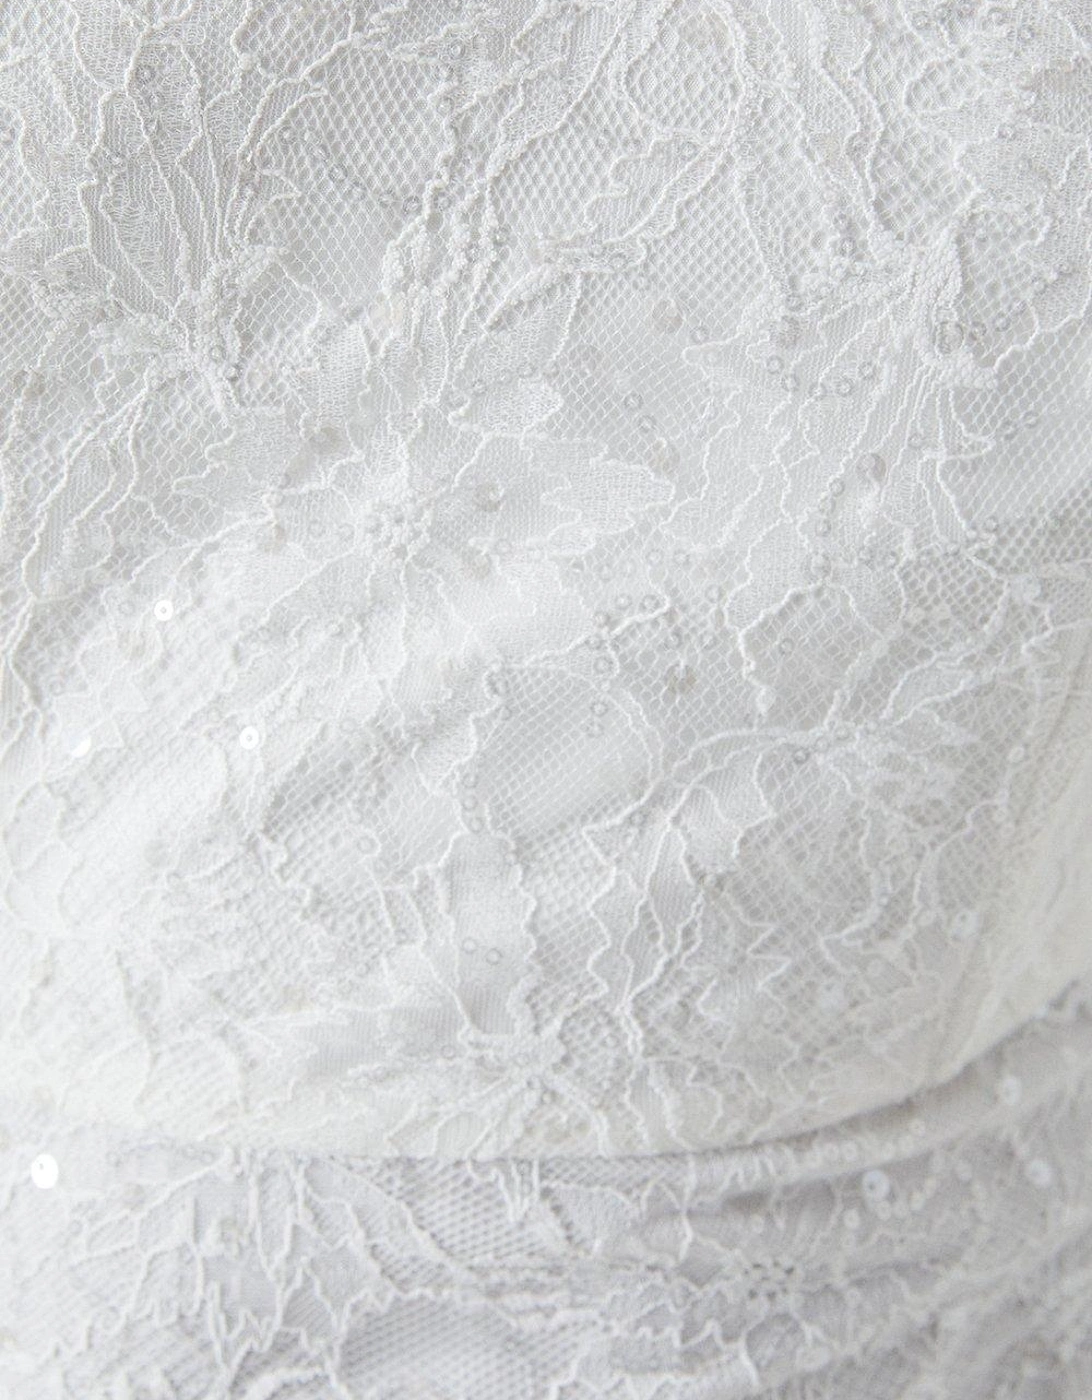 Sequin Lace Wedding Dress With Bolero